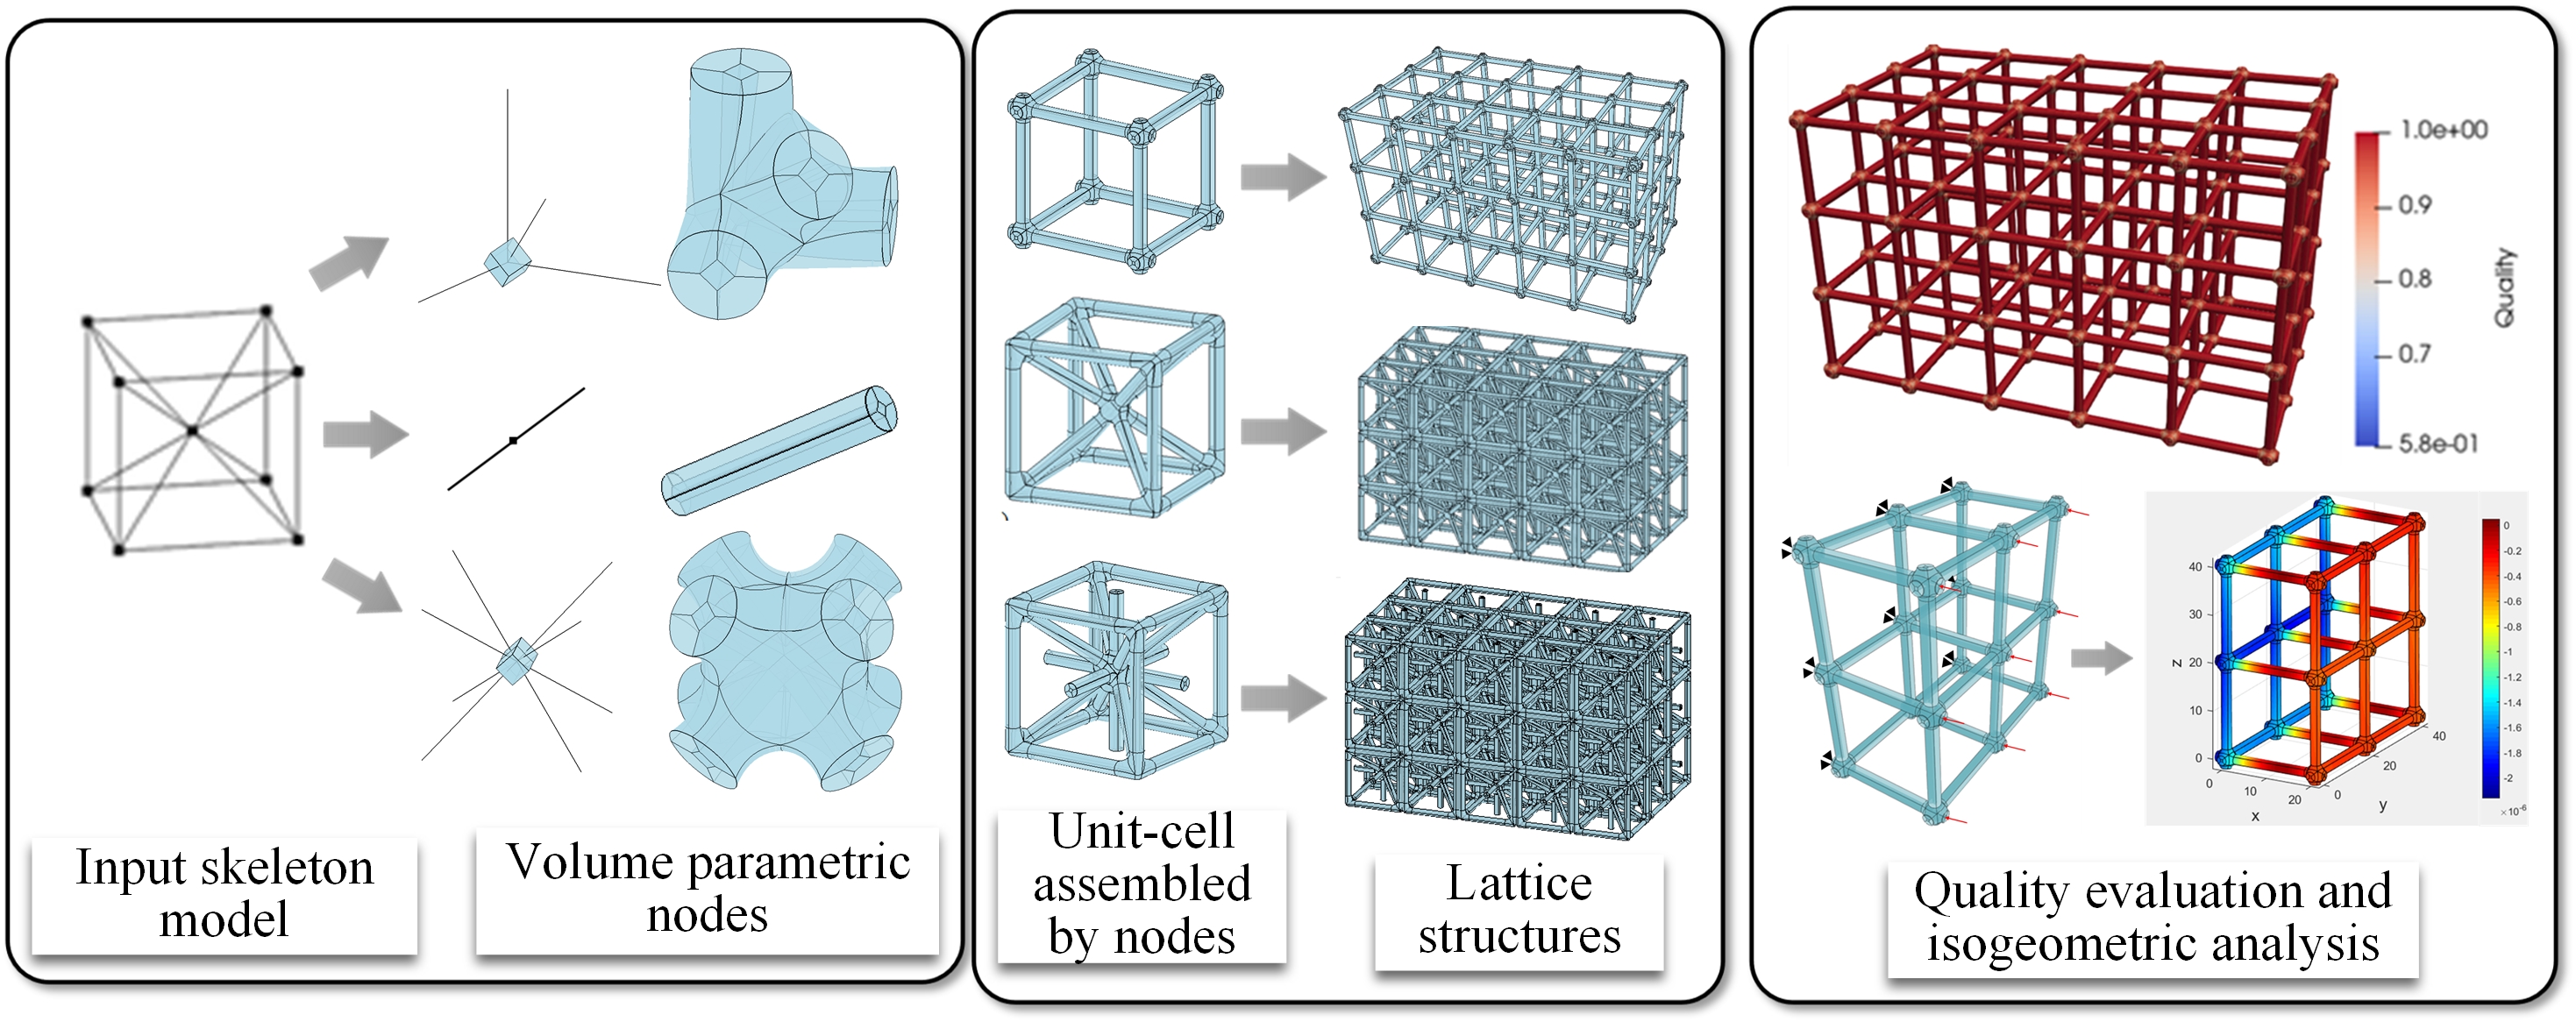 Skeleton-Based Volumetric Parameterizations for Lattice Structures